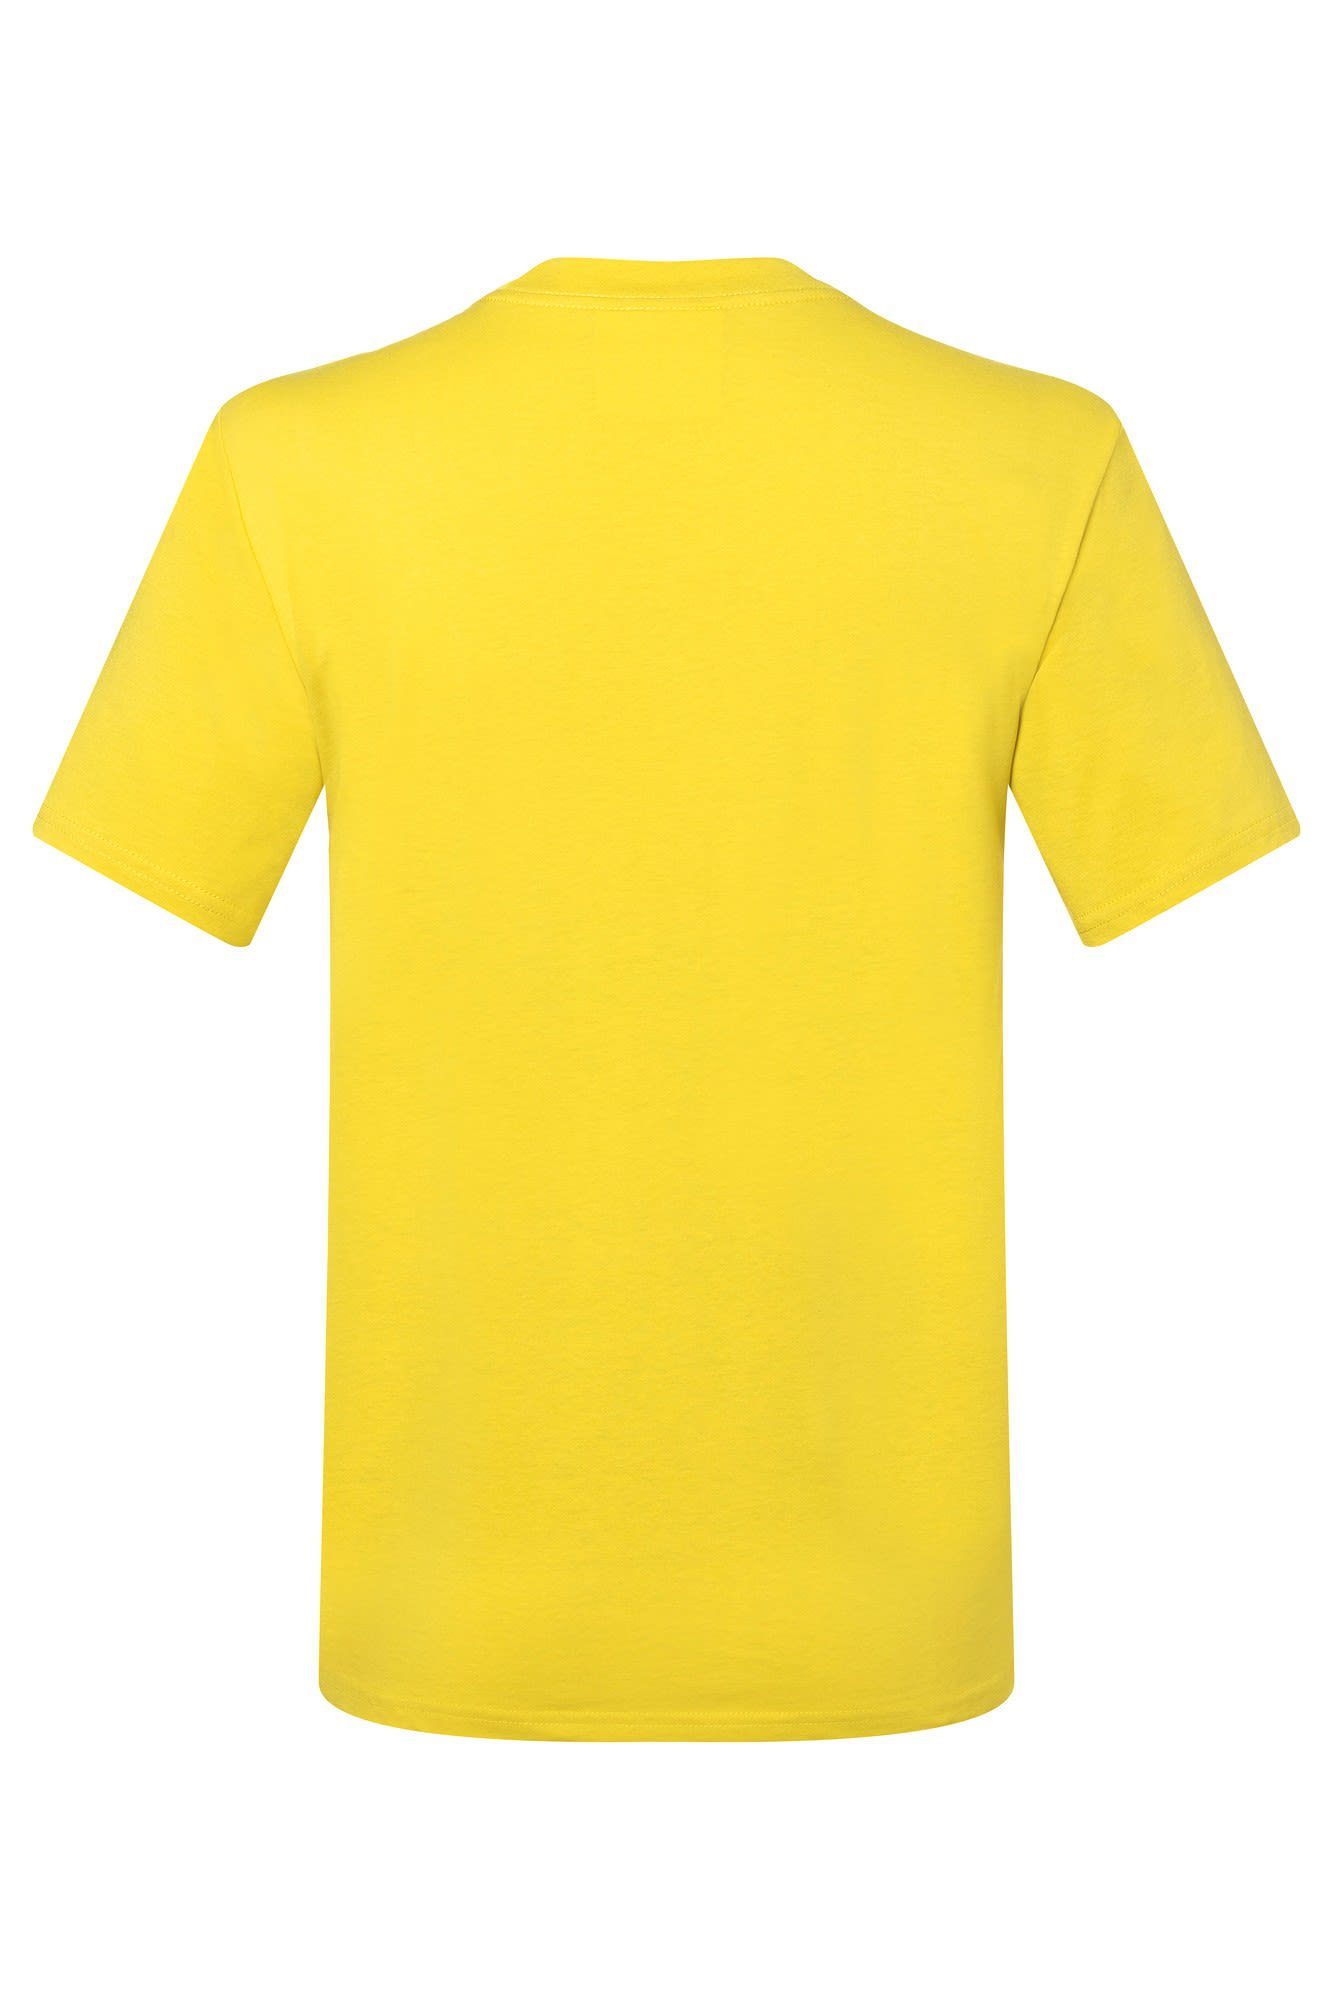 Marmot M Marmot Herren Tee Coastal Limelight Short-sleeve T-Shirt